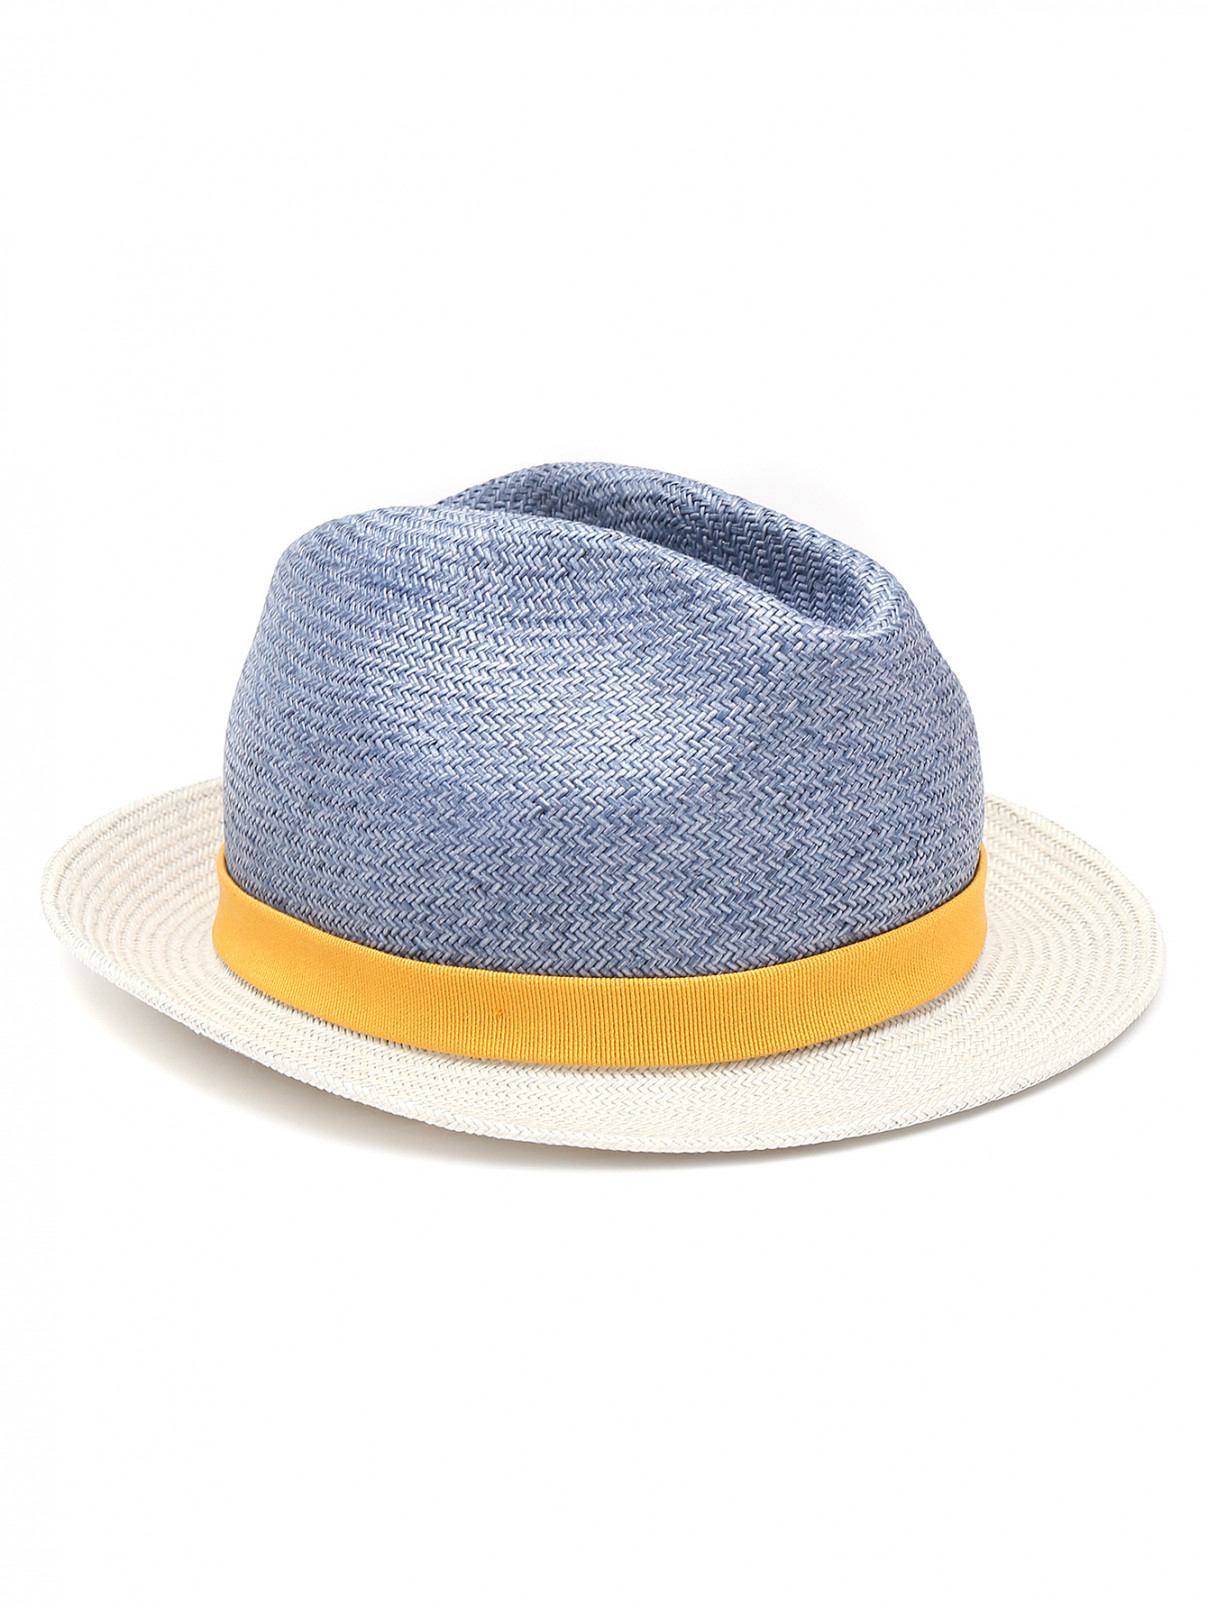 Шляпа с лентой Malo  –  Общий вид  – Цвет:  Синий